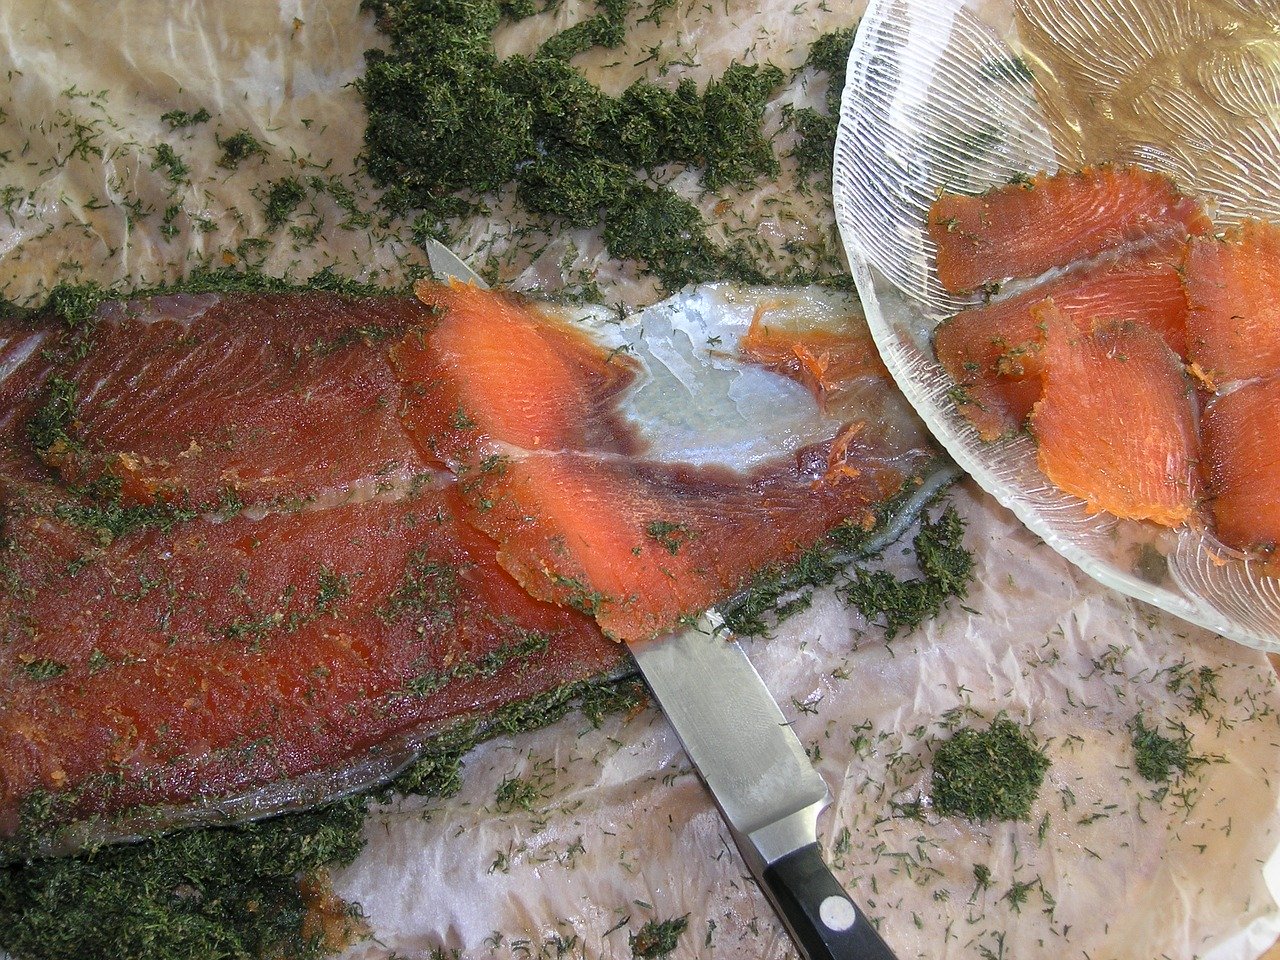 saumon gravlax